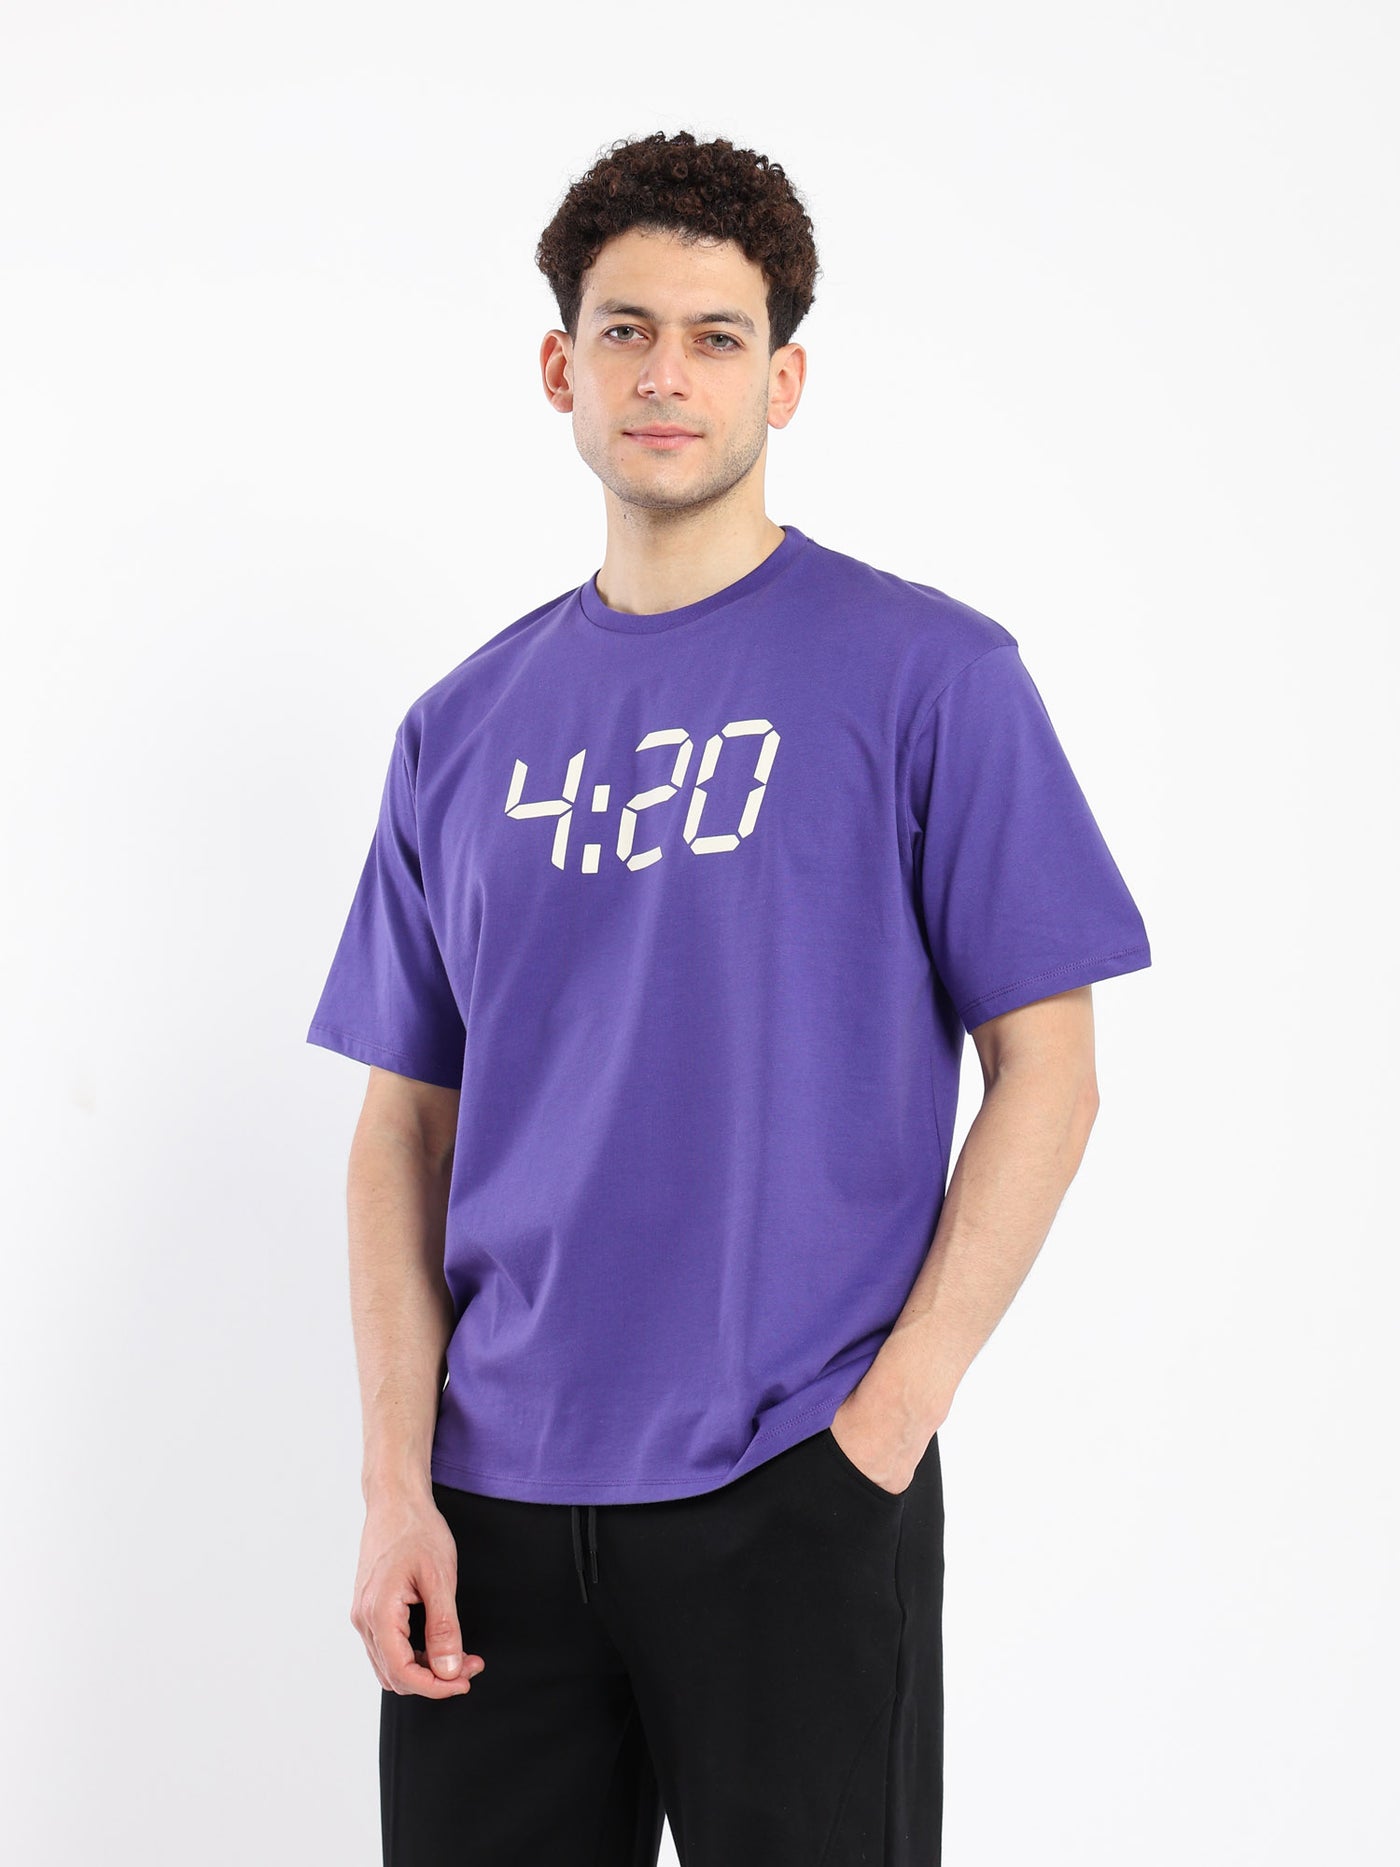 T-Shirt 420 Print T-Shirt